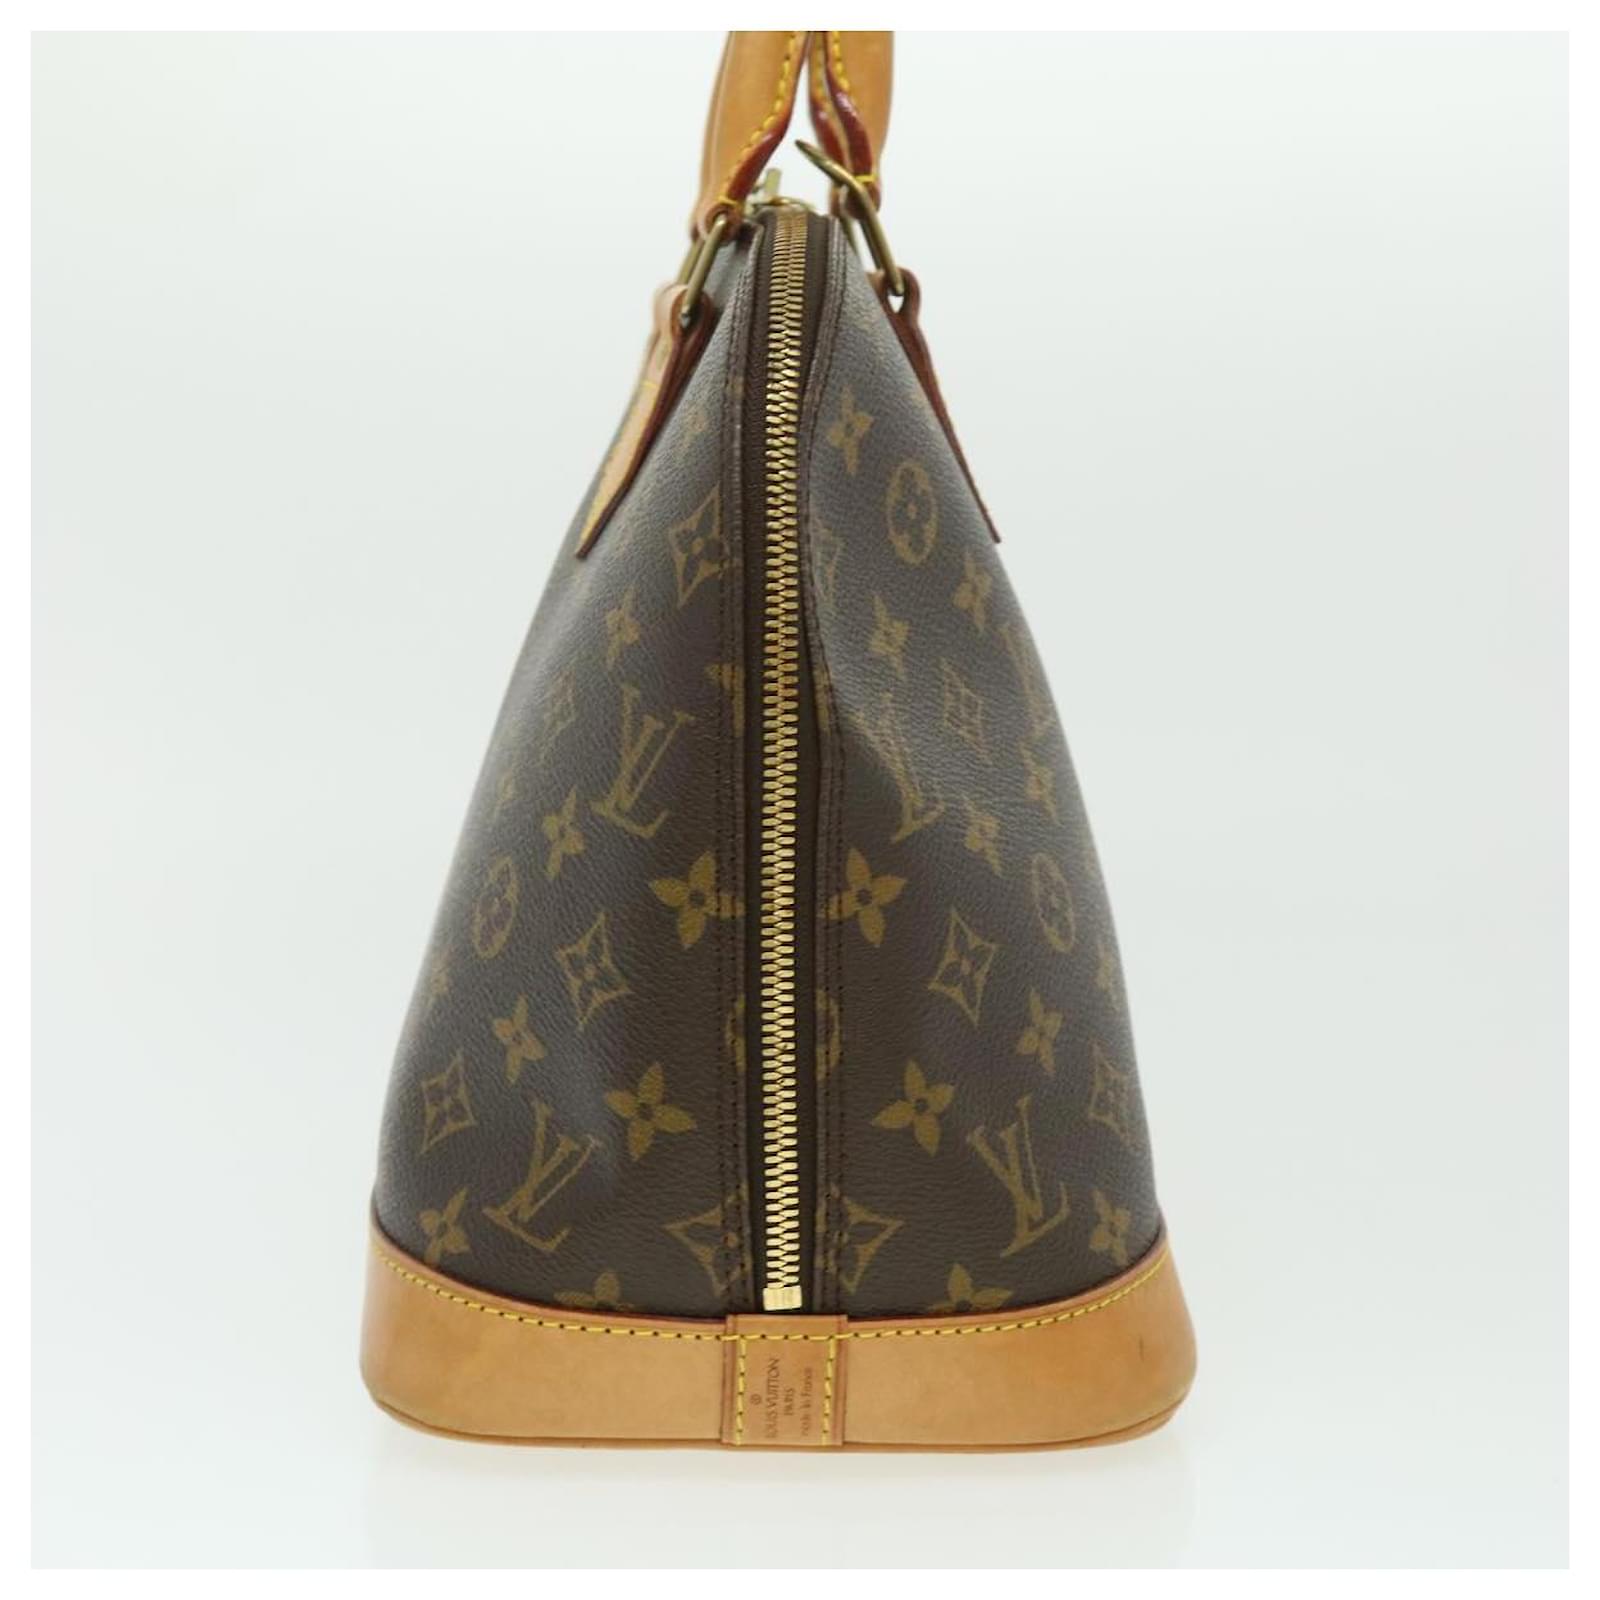 Auth Louis Vuitton Monogram Alma M51130 Women's Handbag